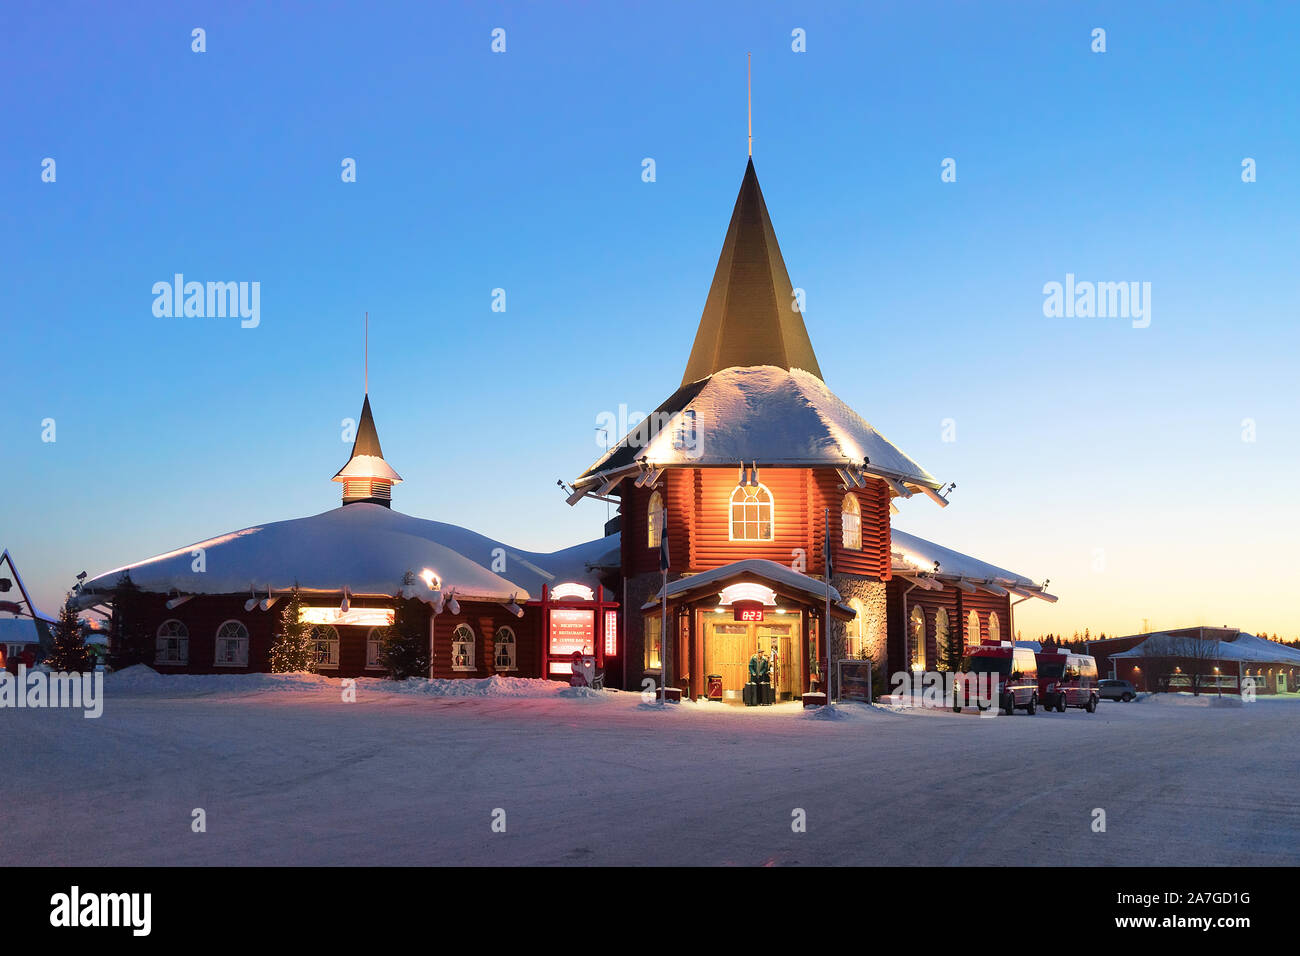 Reception of Santa Claus Holiday Village Lapland at sunset Stock Photo